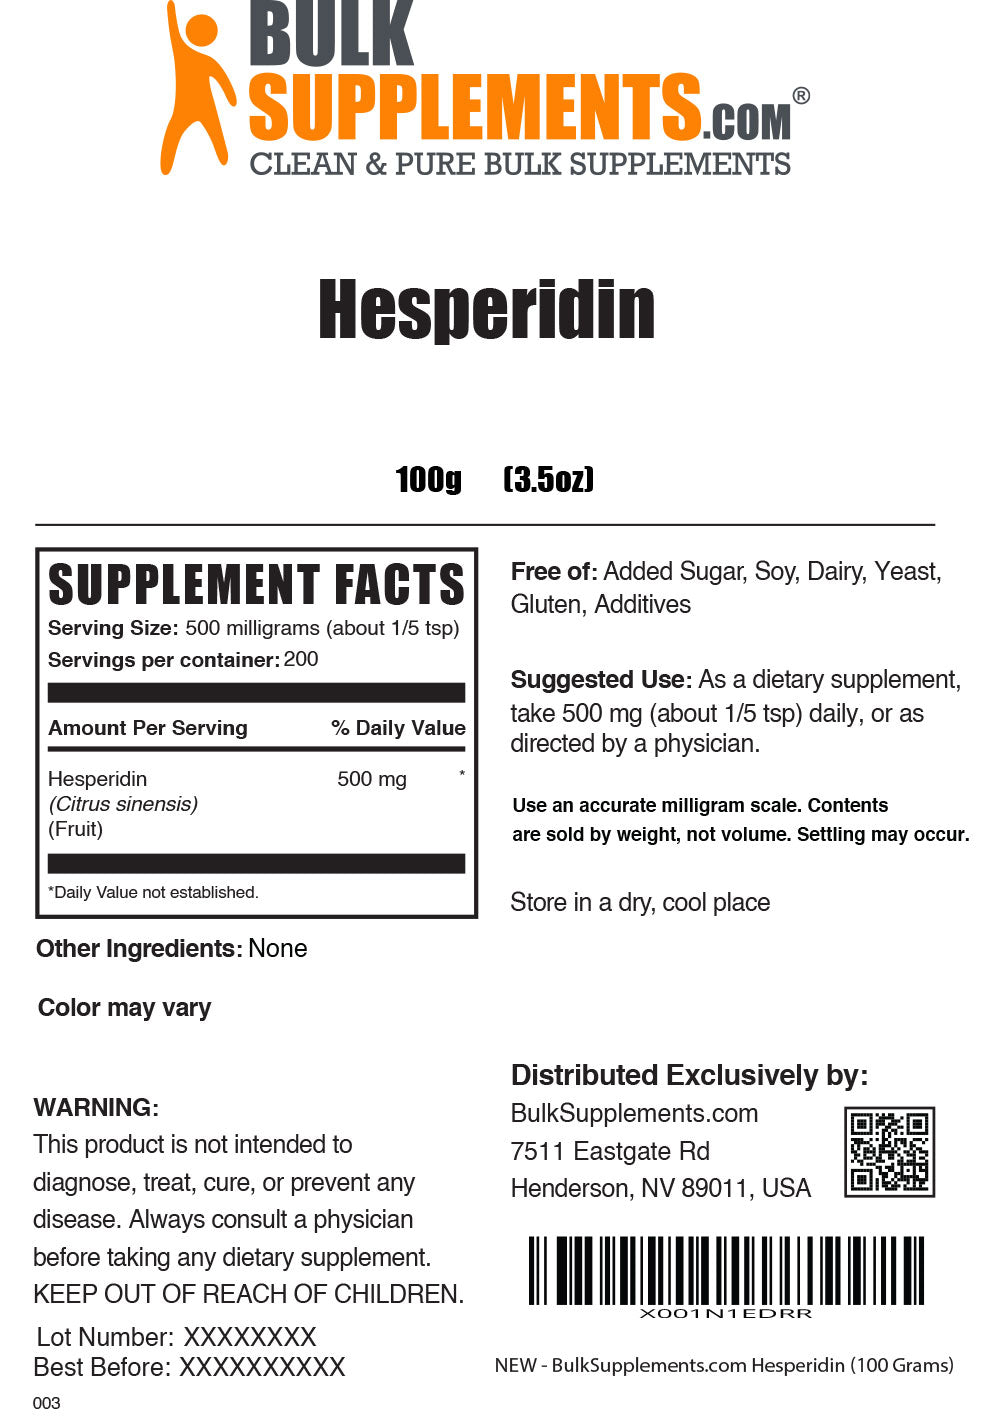 Hesperidin powder label 100g